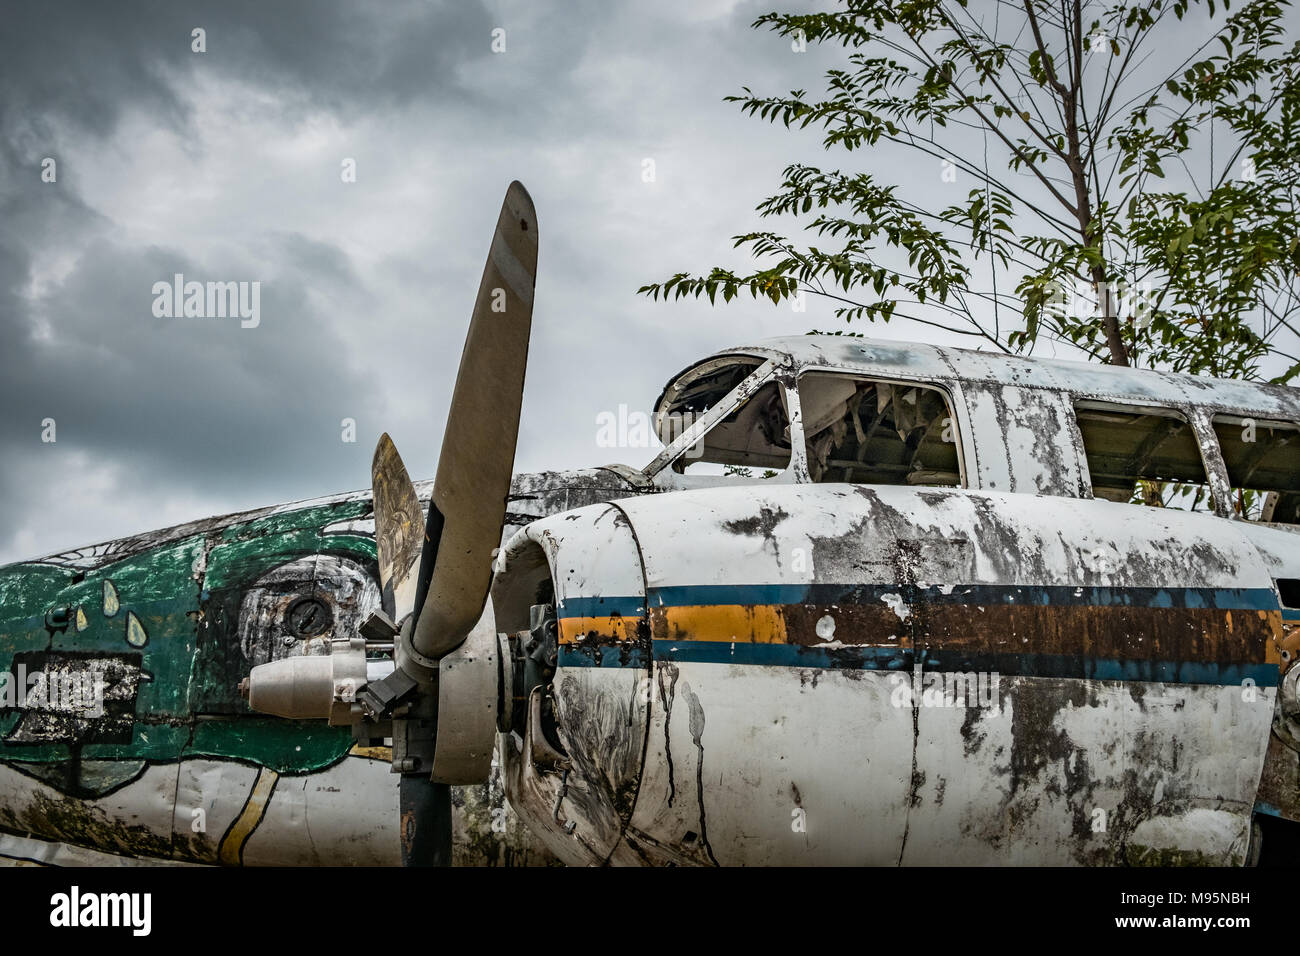 Flugzeug Wrack im Dschungel - alte Propeller Flugzeug in Wald - Stockfoto